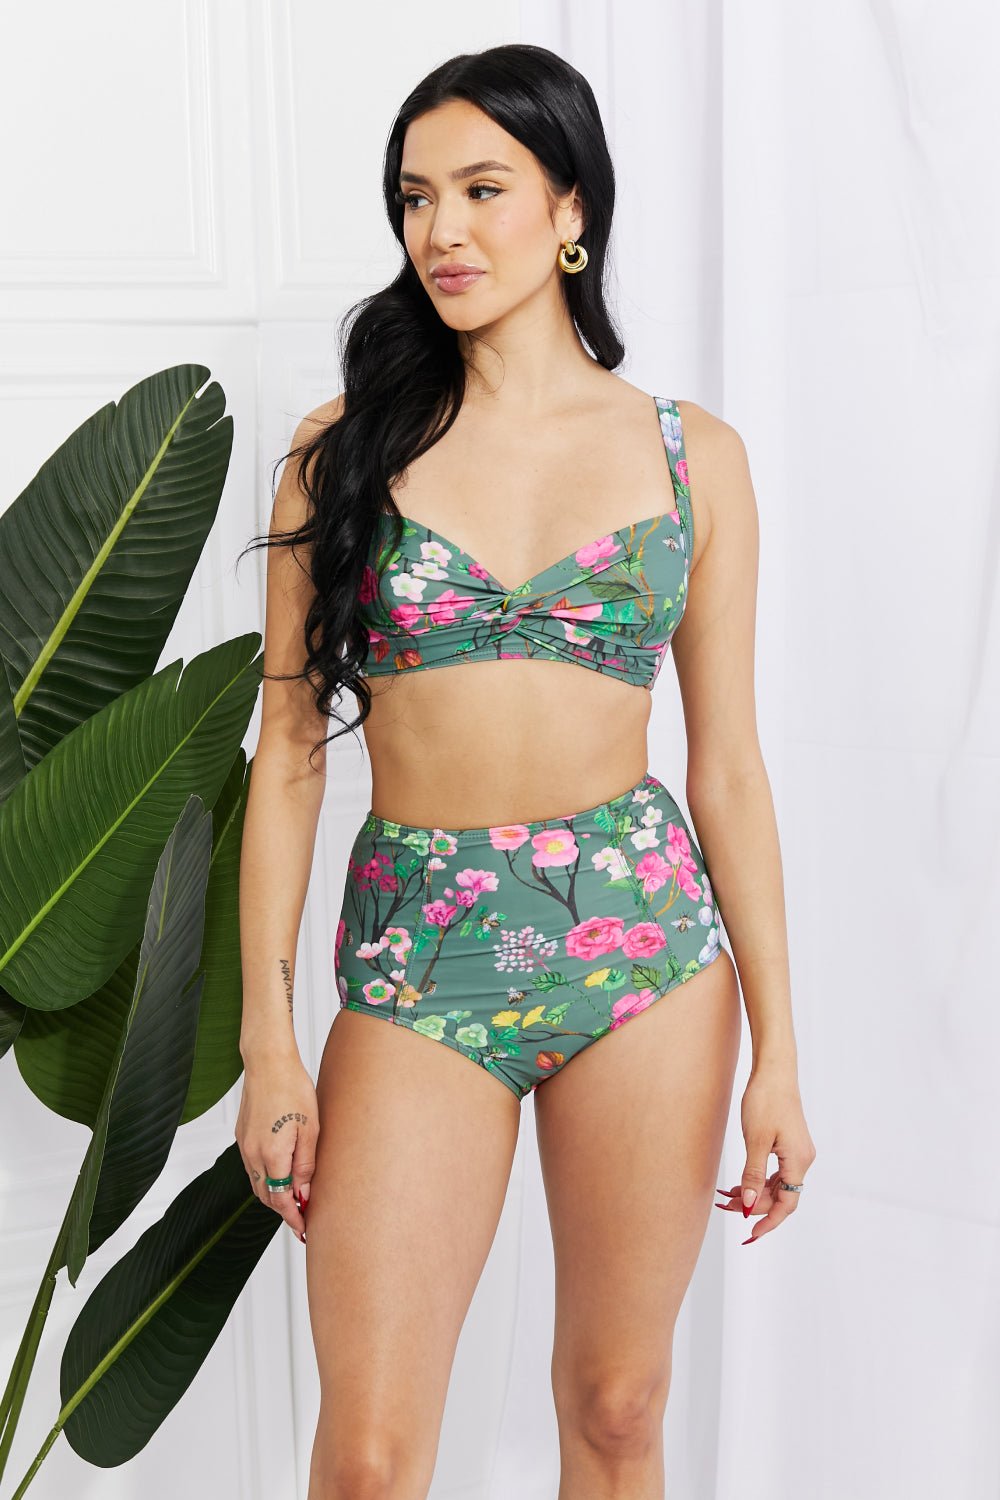 Marina West Swim Take A Dip Twist High - Rise Bikini in Sage - Happily Ever Atchison Shop Co.